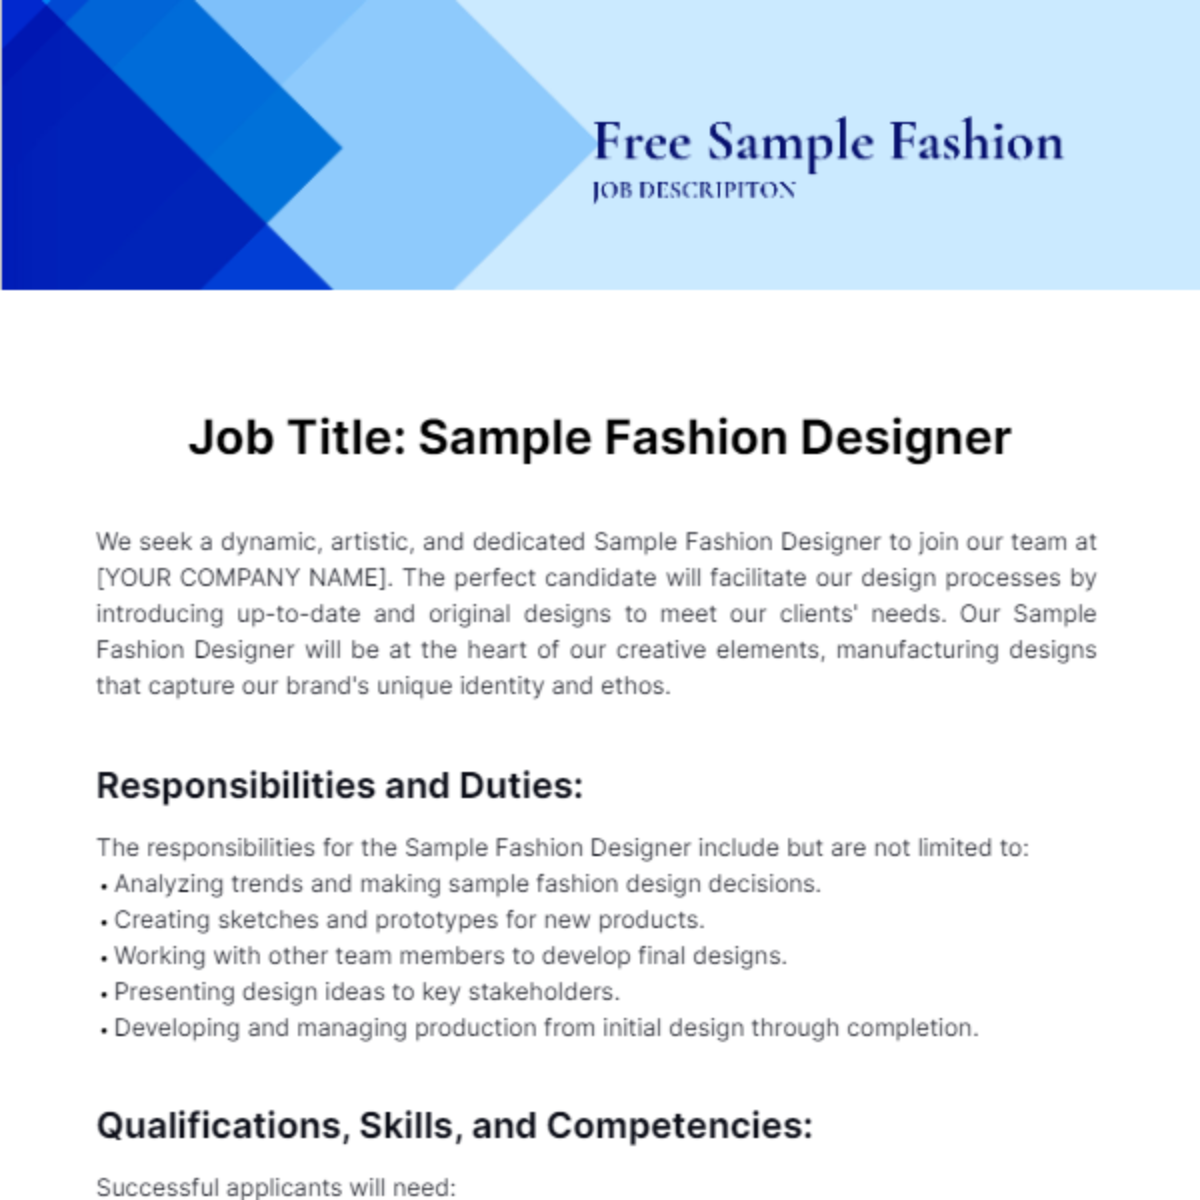 Free Sample Fashion Job Description Template